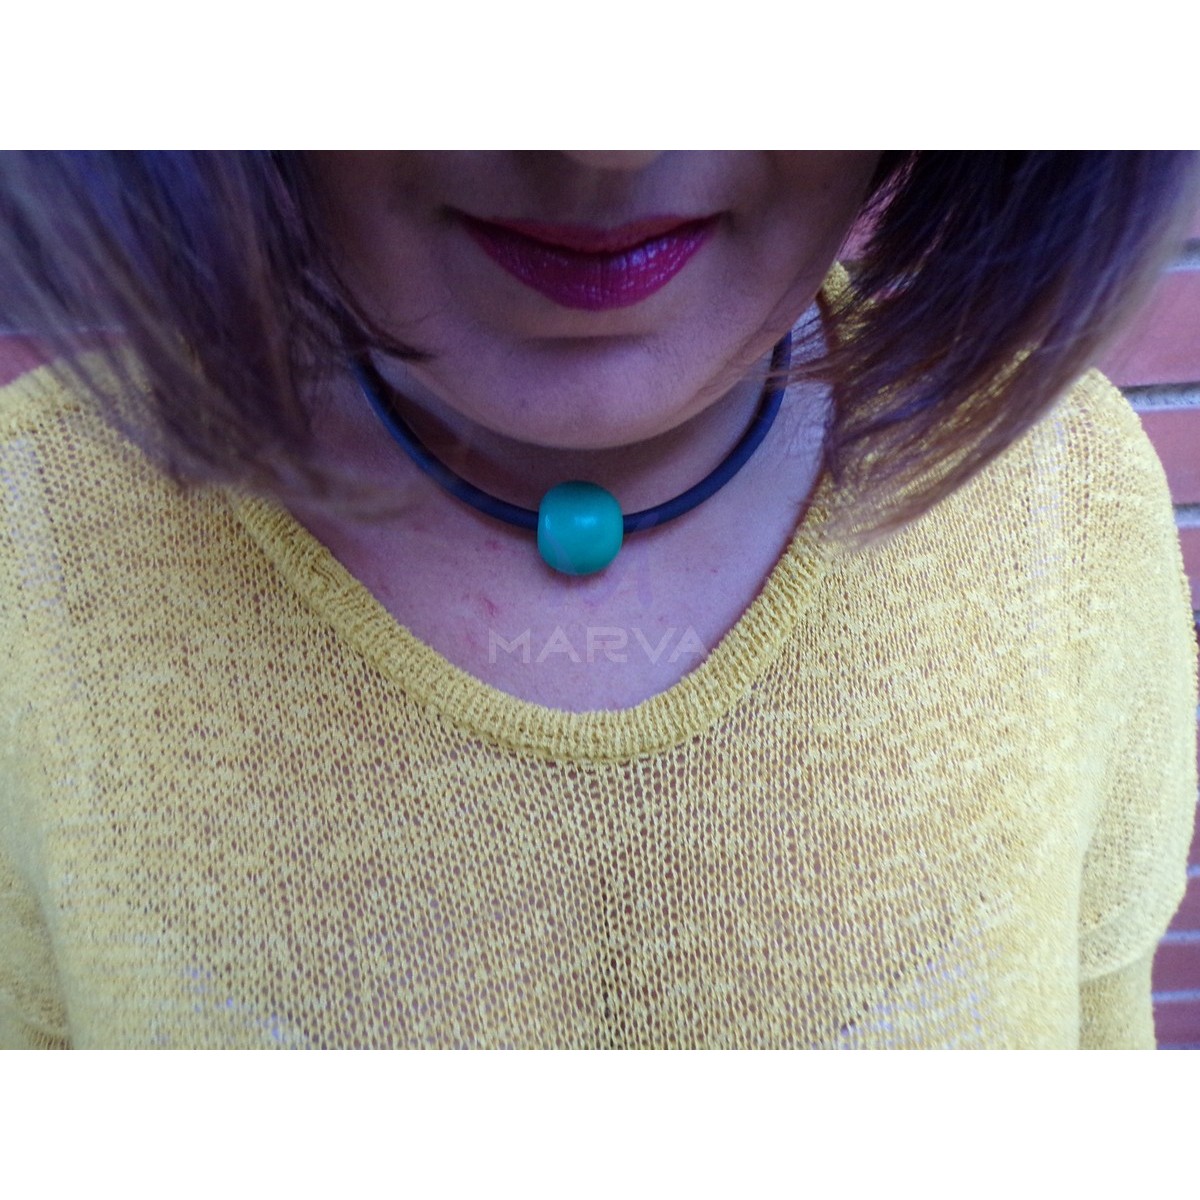 Collar UTAWALEZA -Verd Turquesa-